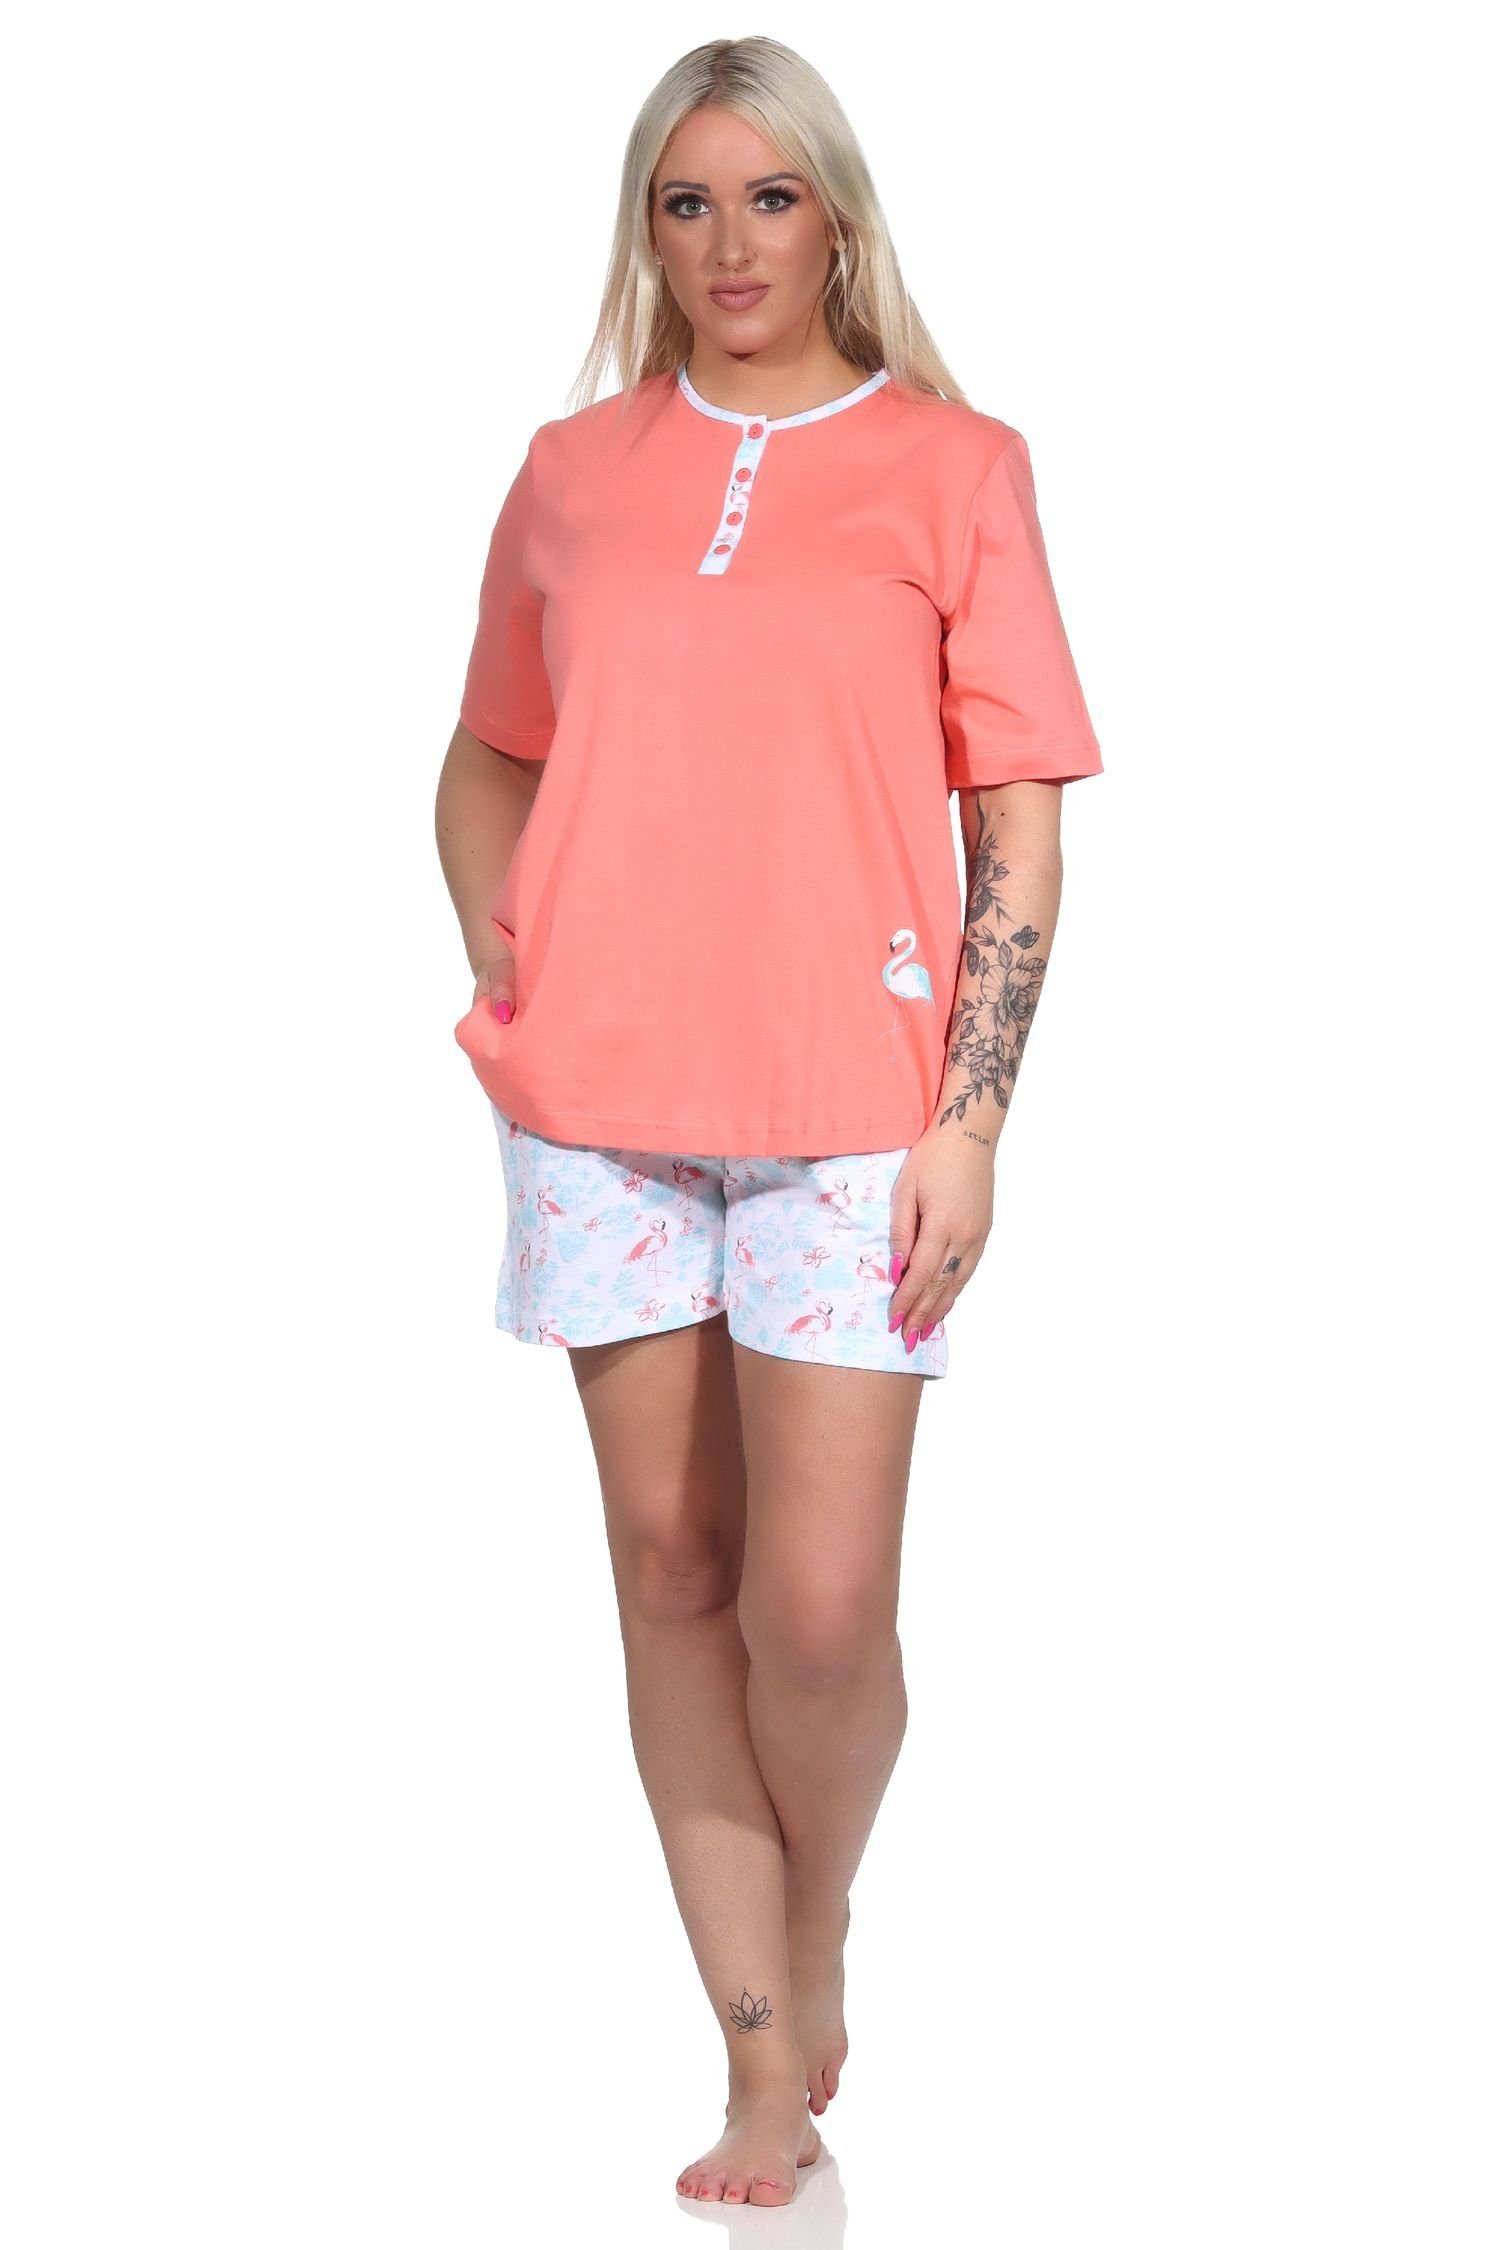 Damen Shorty apricot Normann mit Motiv Schlafanzug Pyjama Flamingo kurzarm